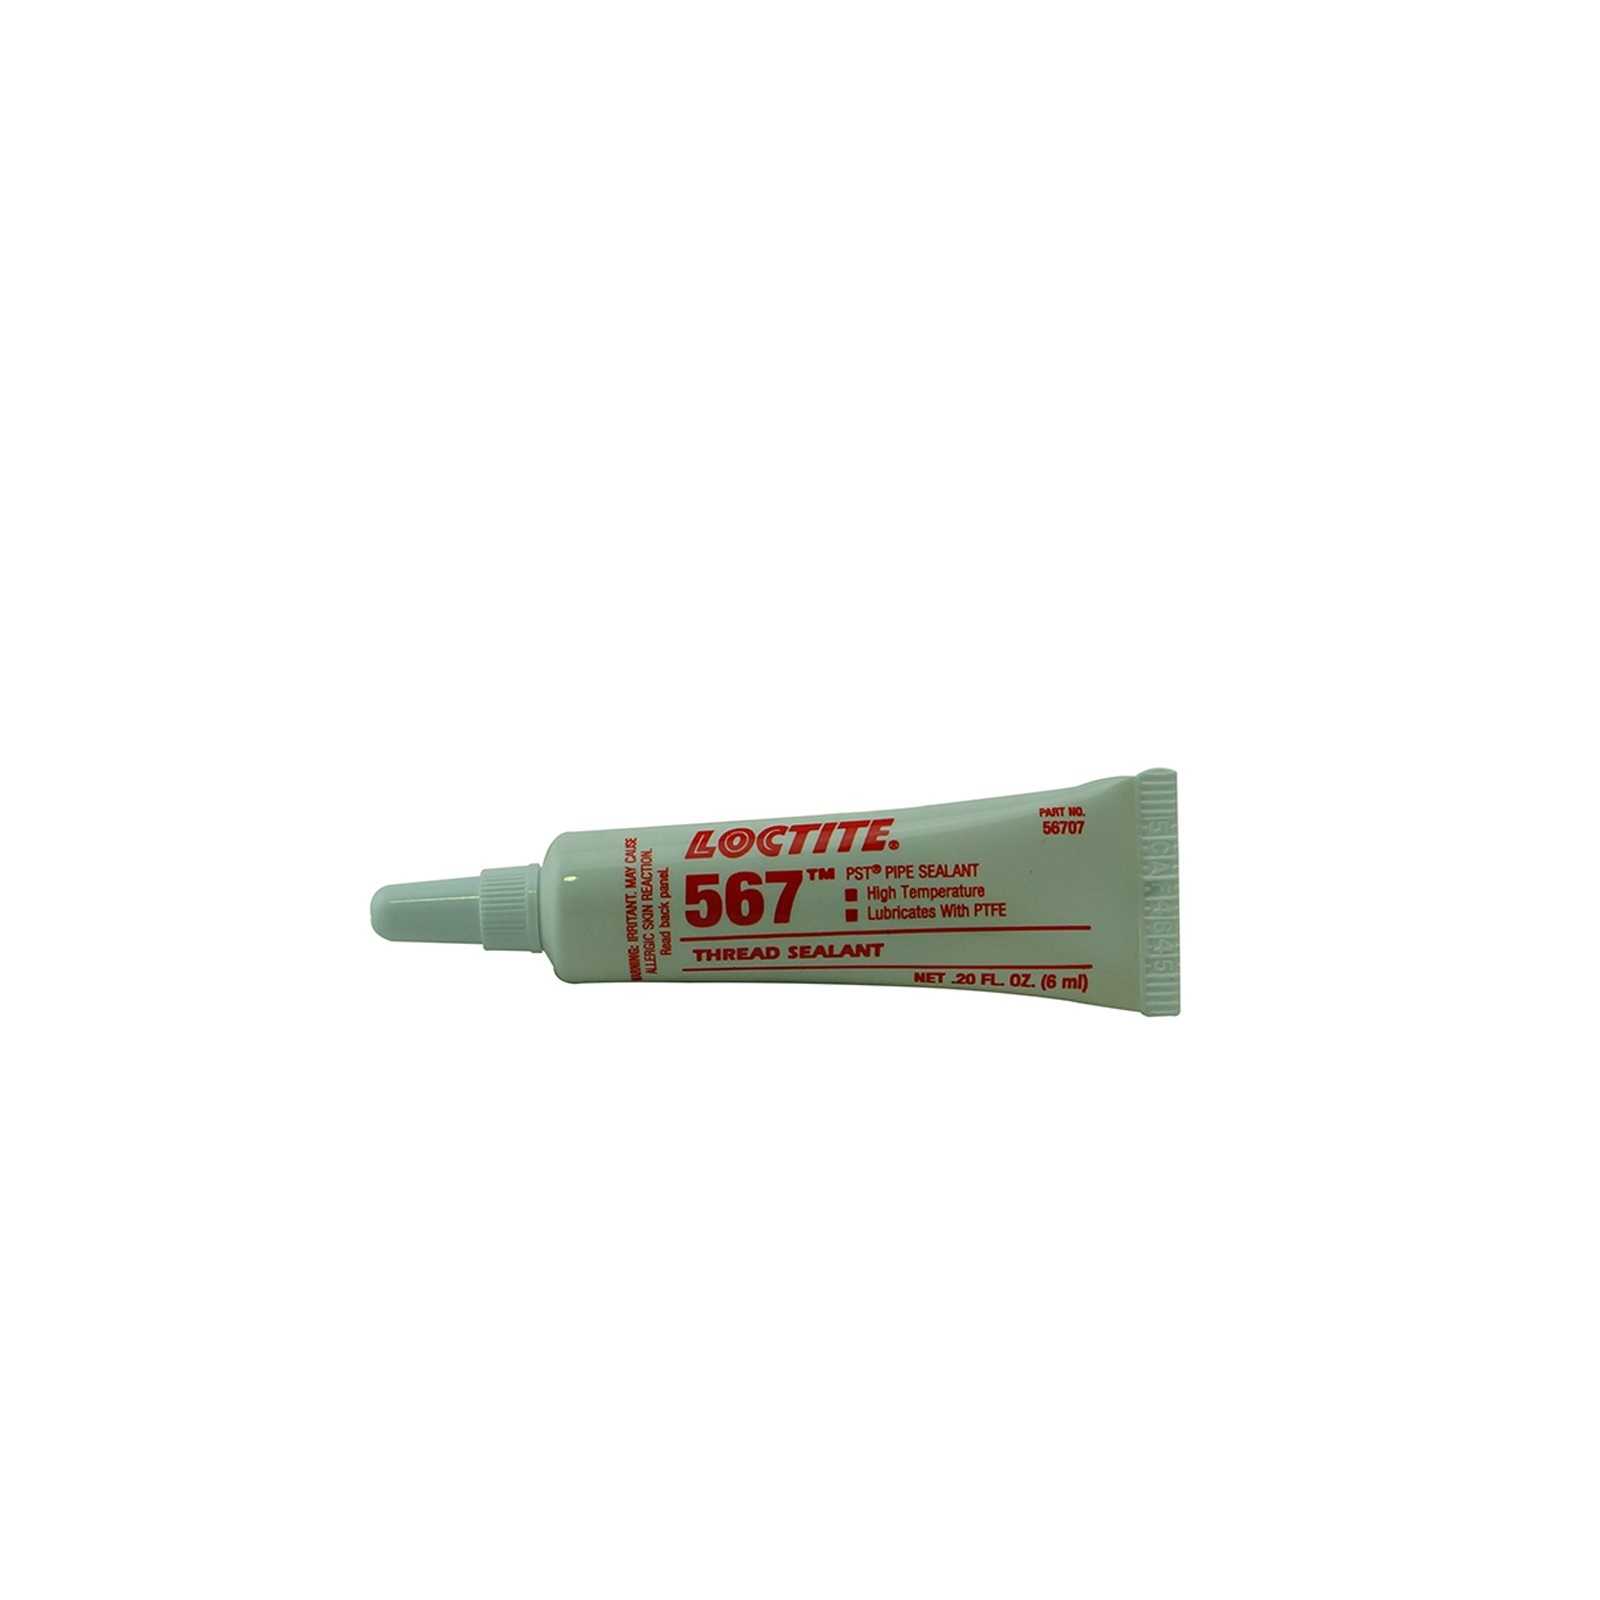 Universal Right Angle Bracket Kit - Flashlube Diesel Pre Filter Water Separator